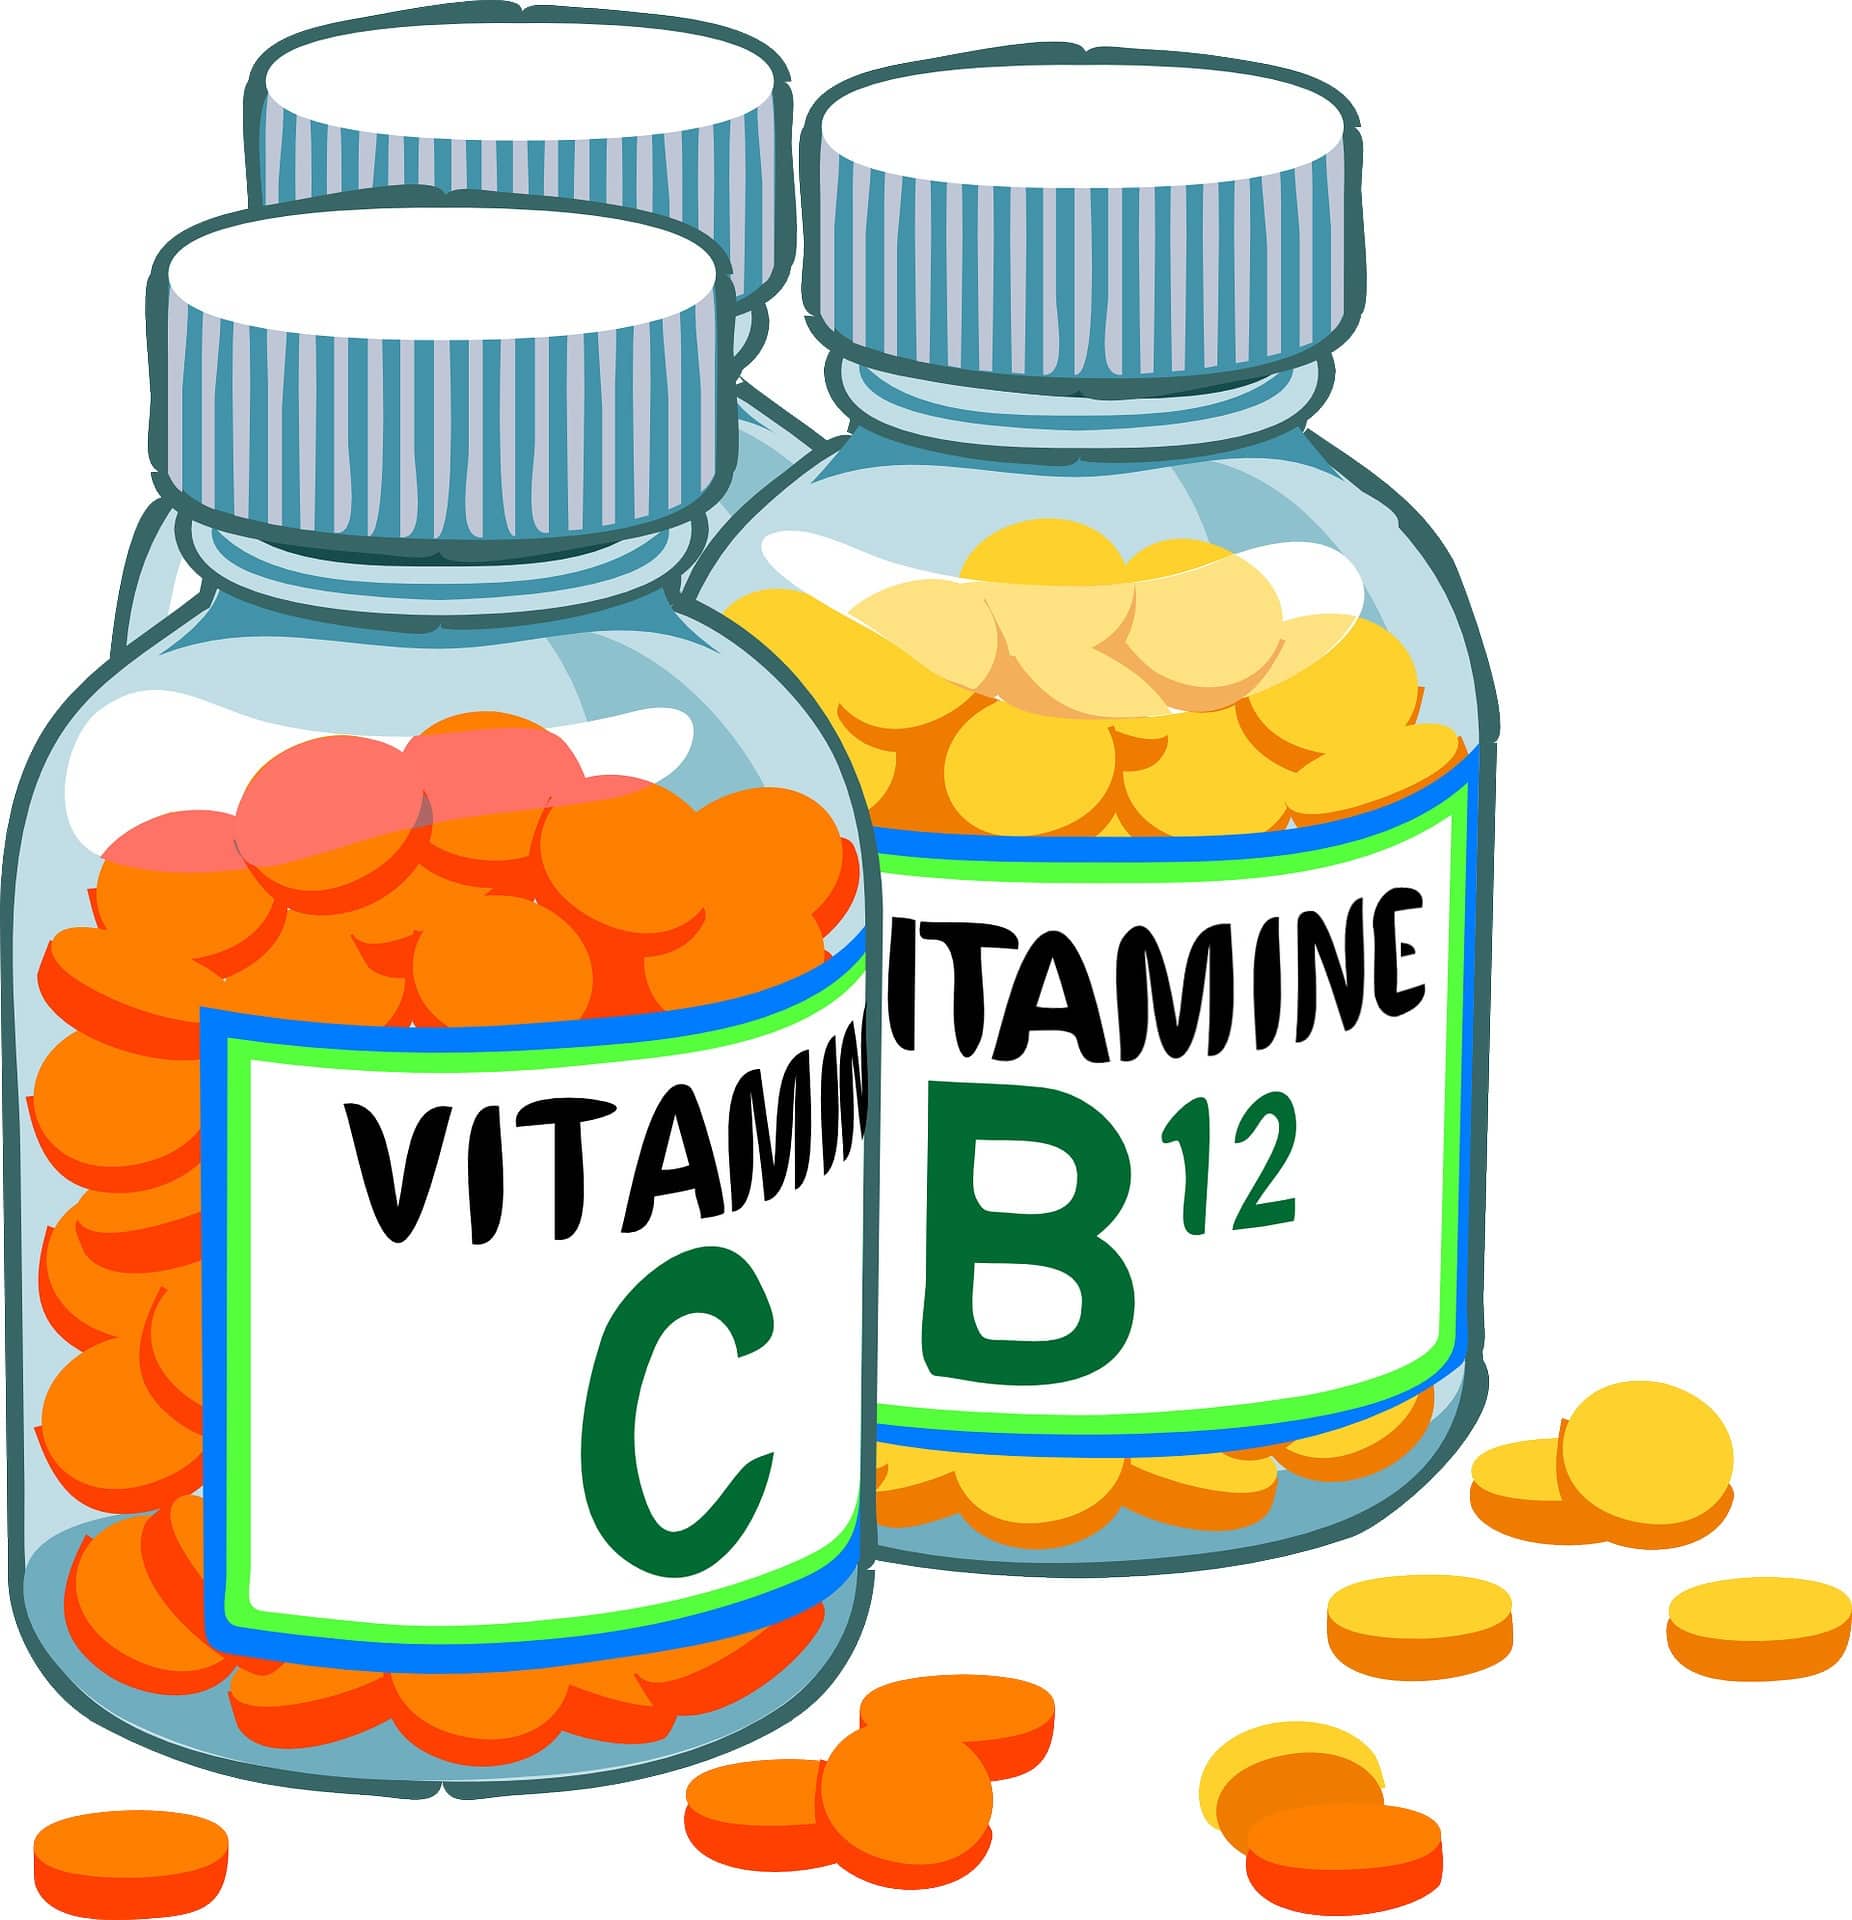 La vitamine B12 est absolument indispensable